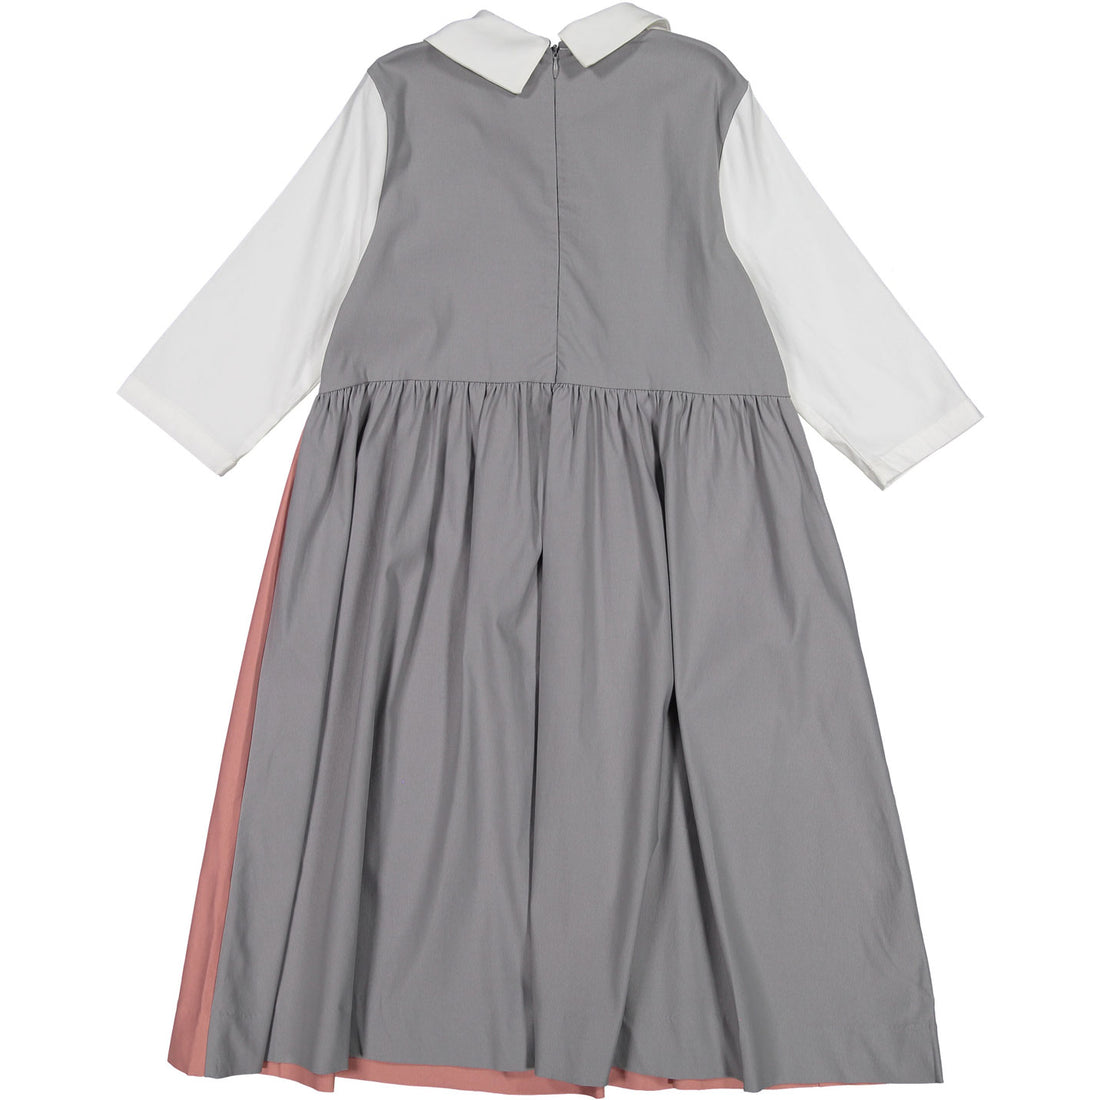 Ava and Lu White/Pink/Grey Collar Dress